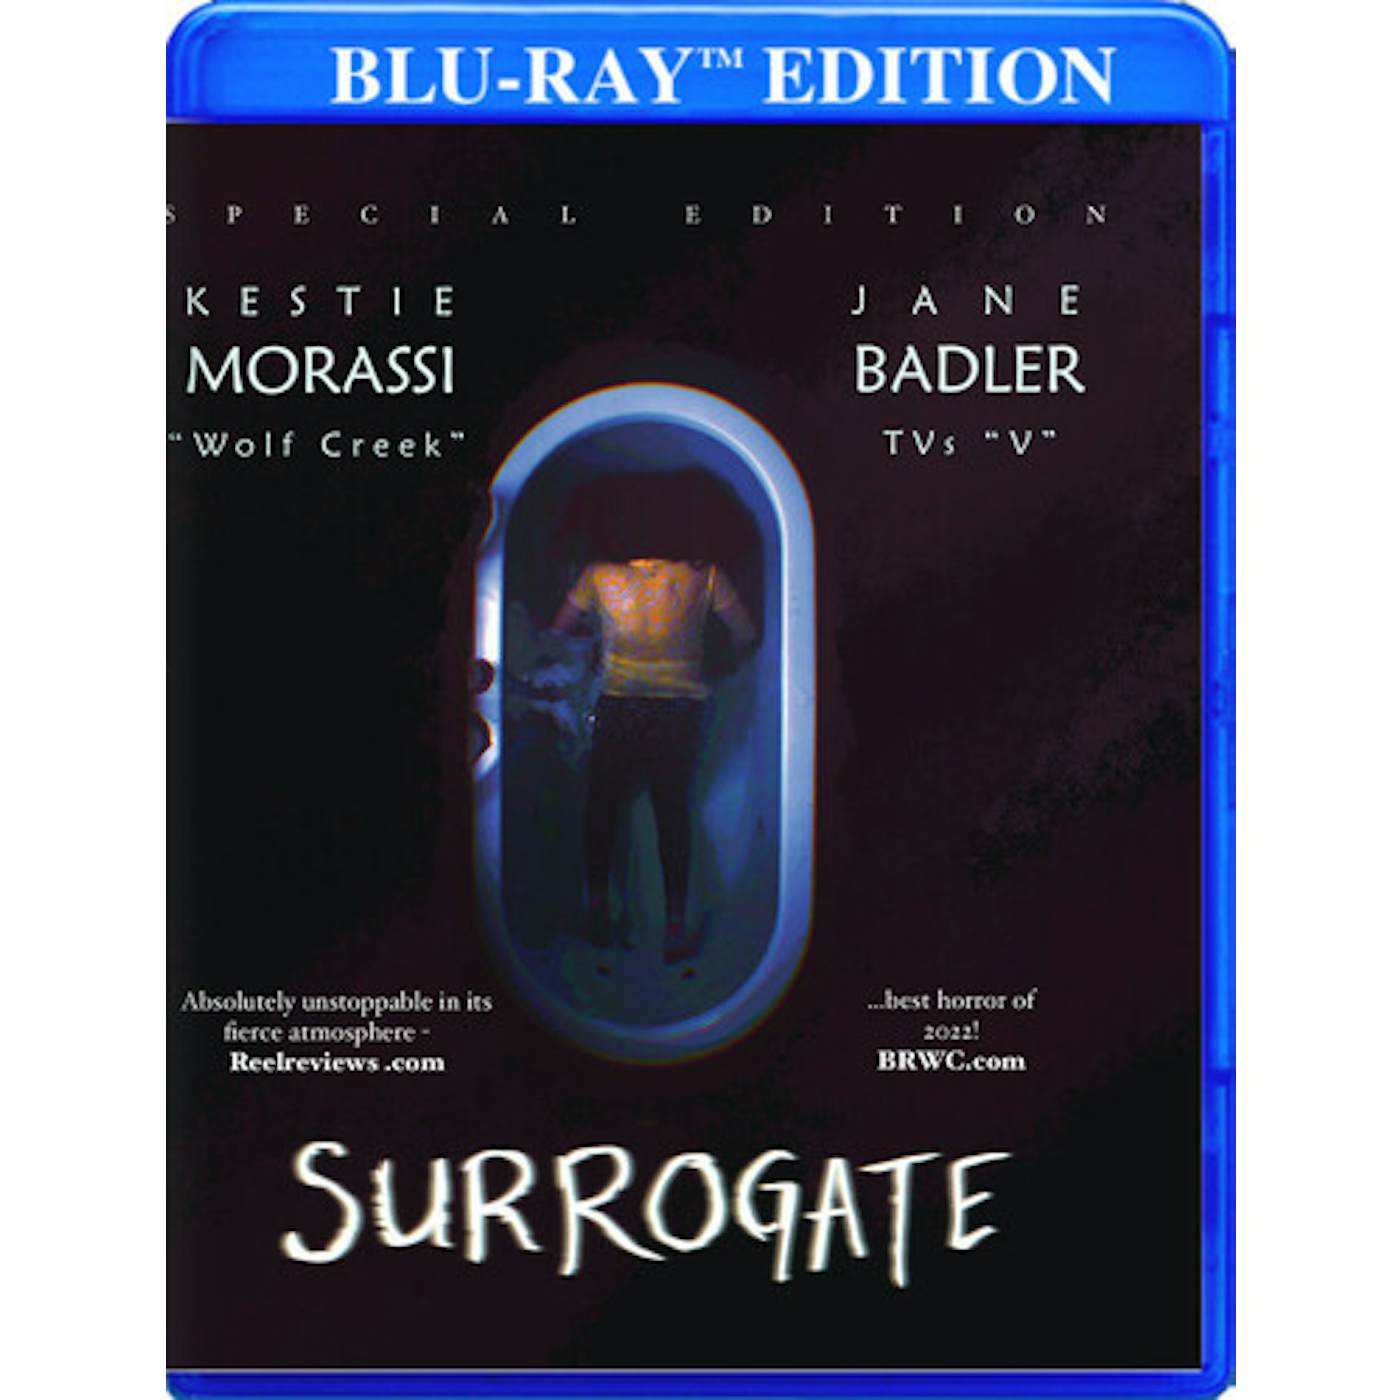 SURROGATE Blu-ray